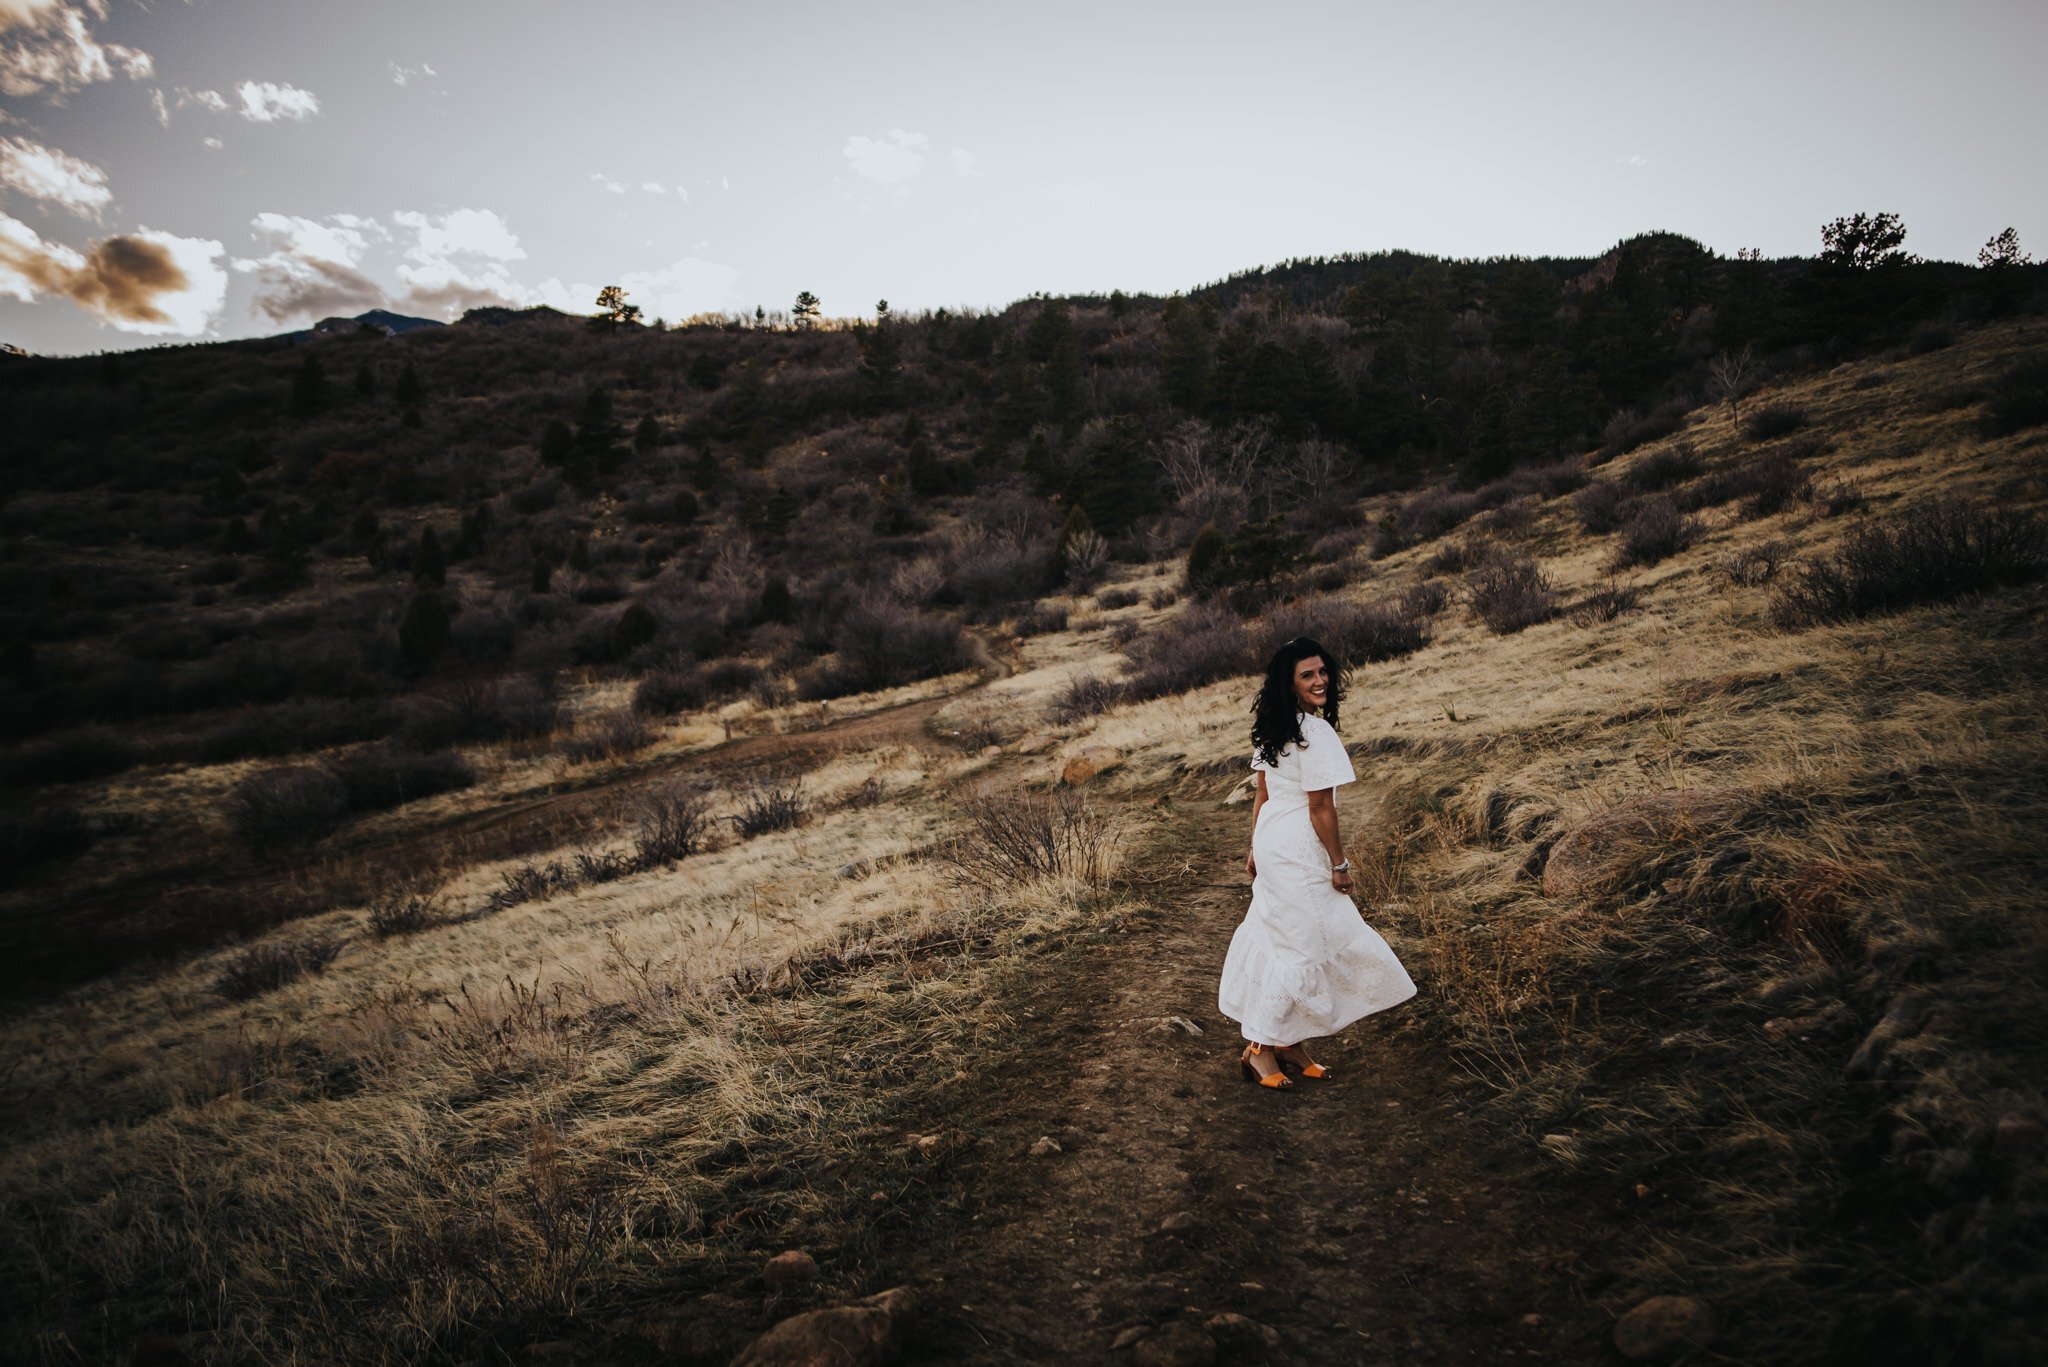 Celi+Turner+Headshots+Colorado+Springs+Colorado+Sunset+Mountains+Field+Woman+Wild+Prairie+Photography-30-2020.jpeg